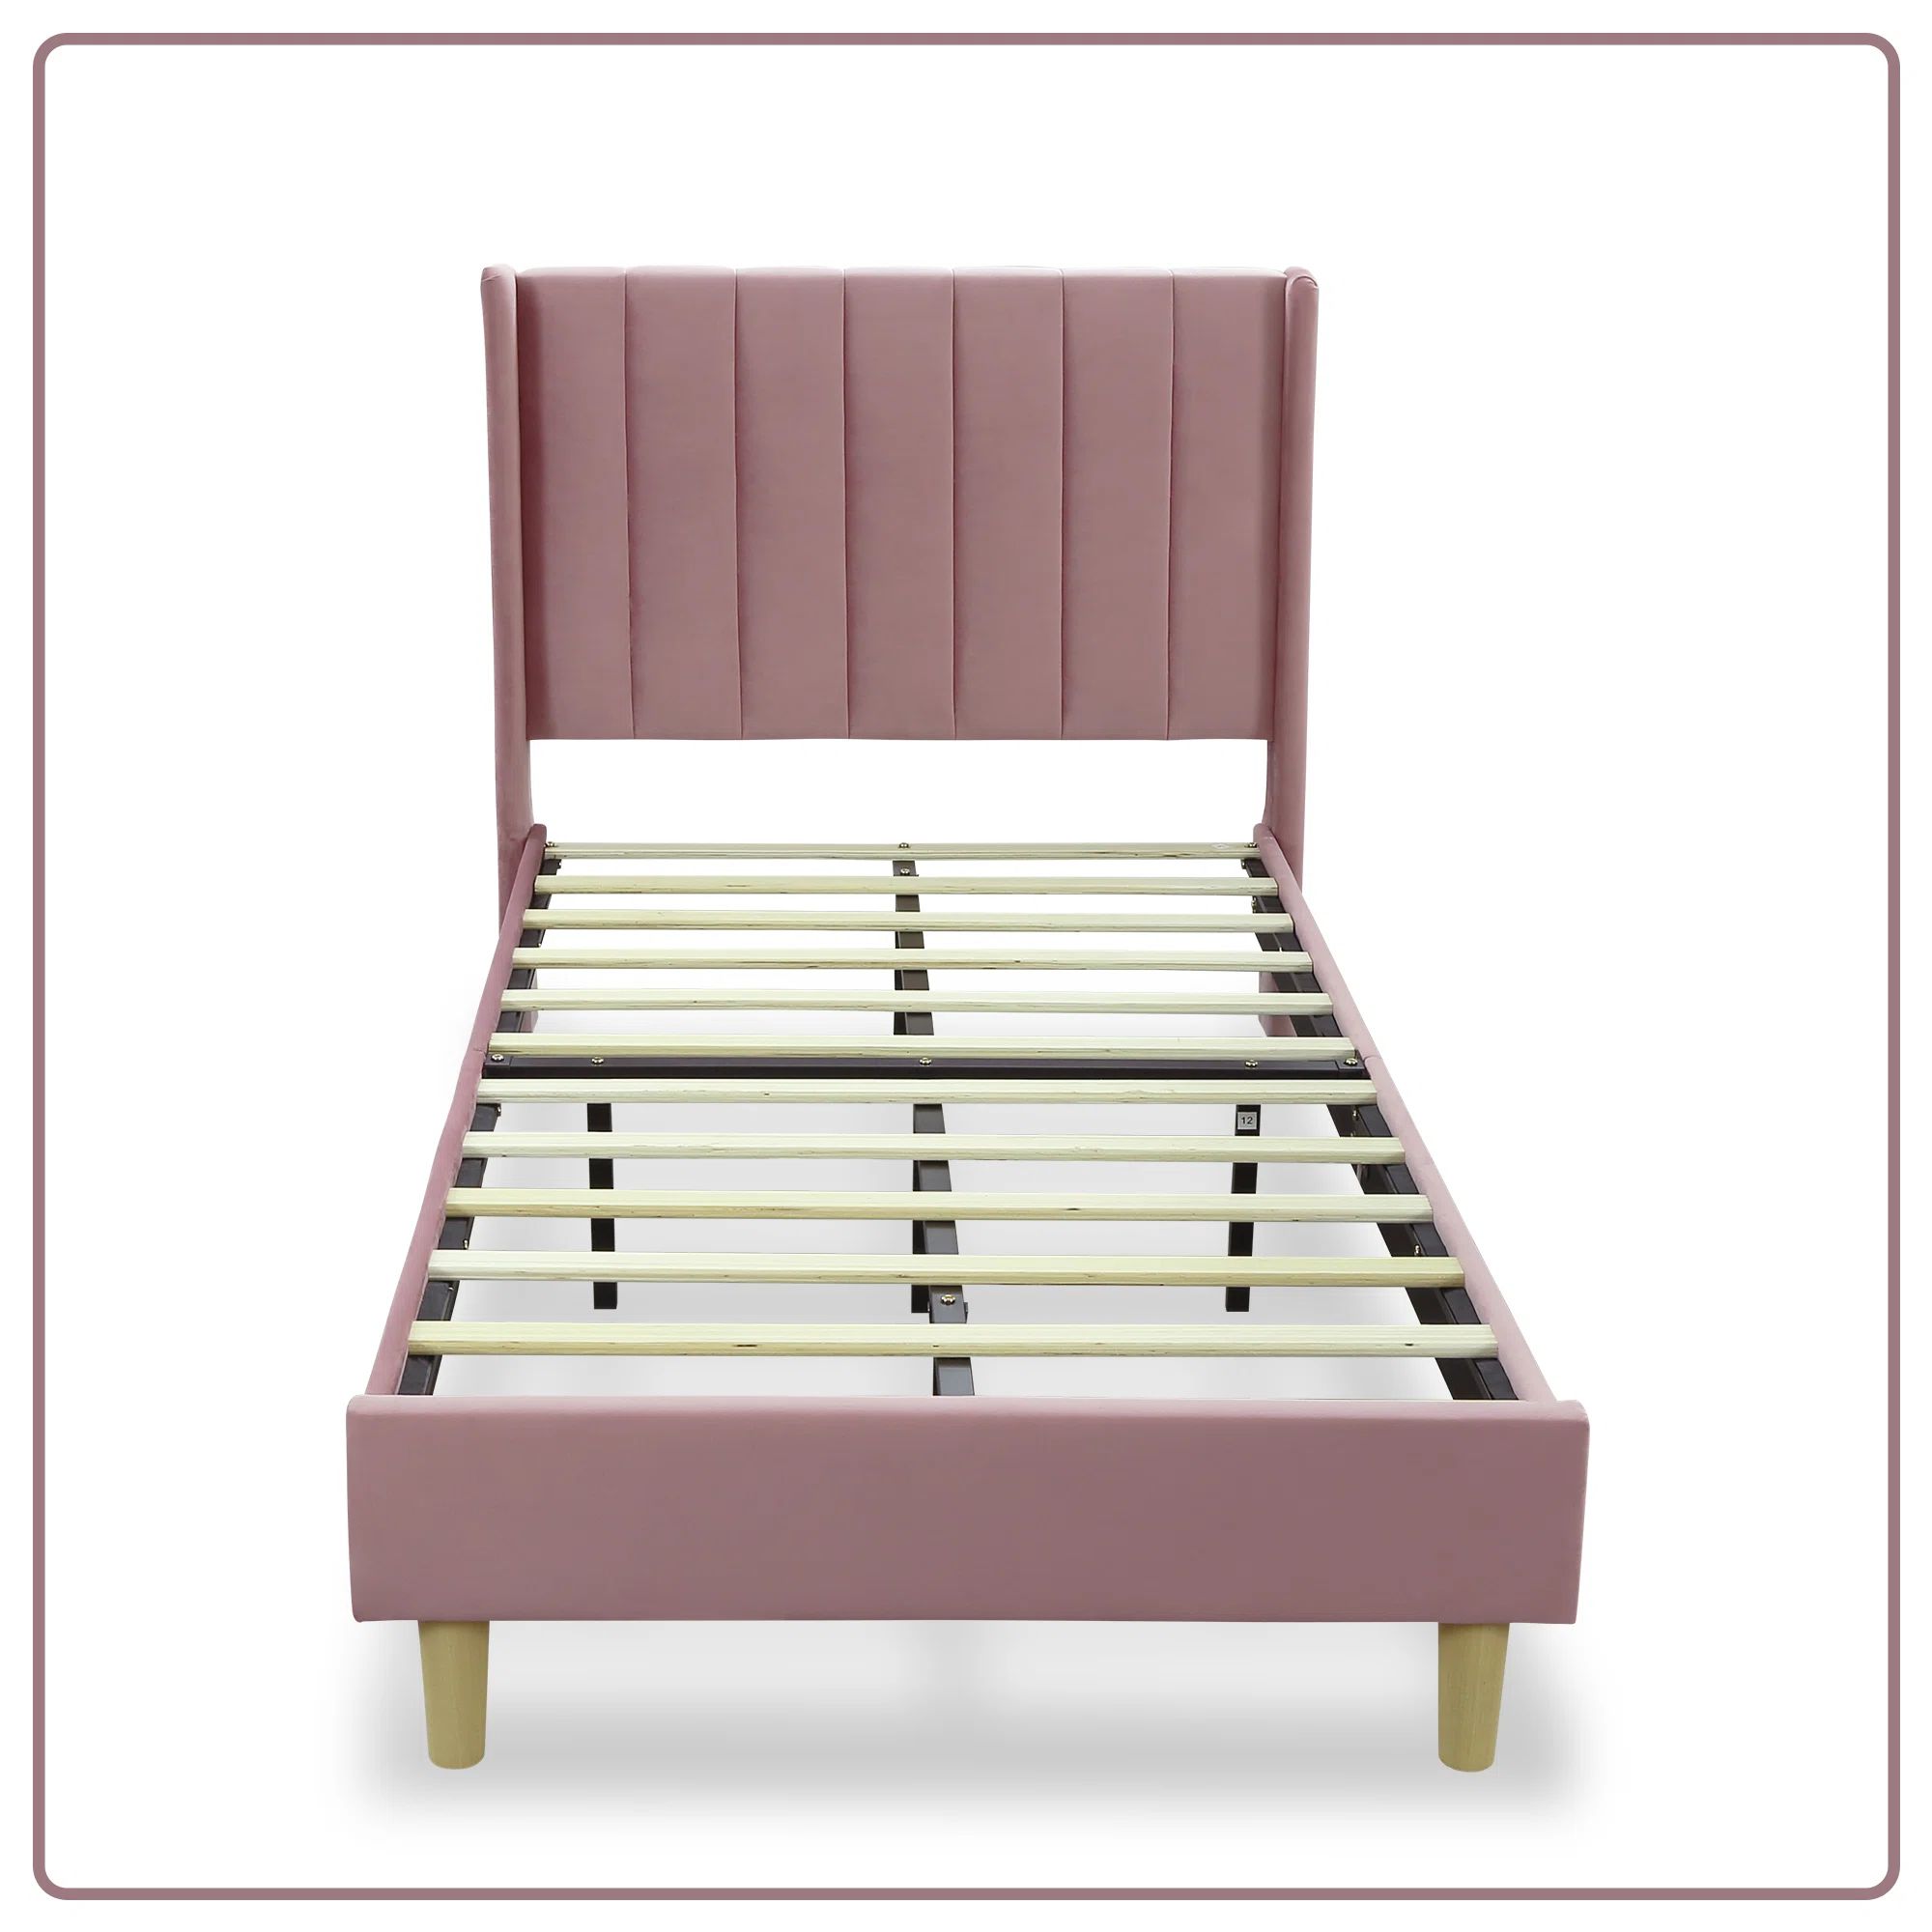 Eriksay Upholstered Bed | Wayfair North America